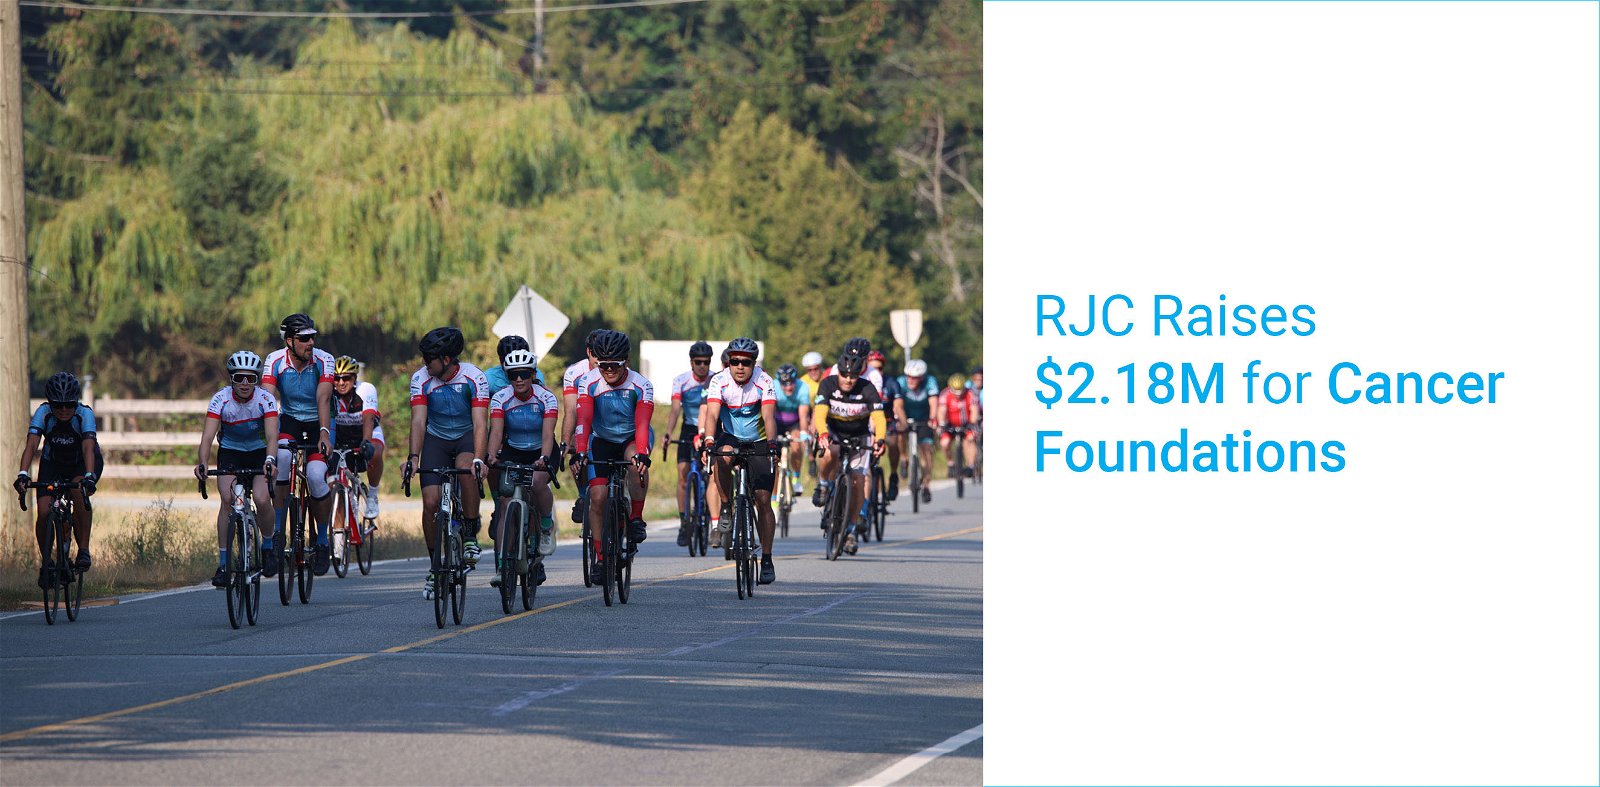 Team RJC Raises $2.18M for Cancer Foundations Across Canada